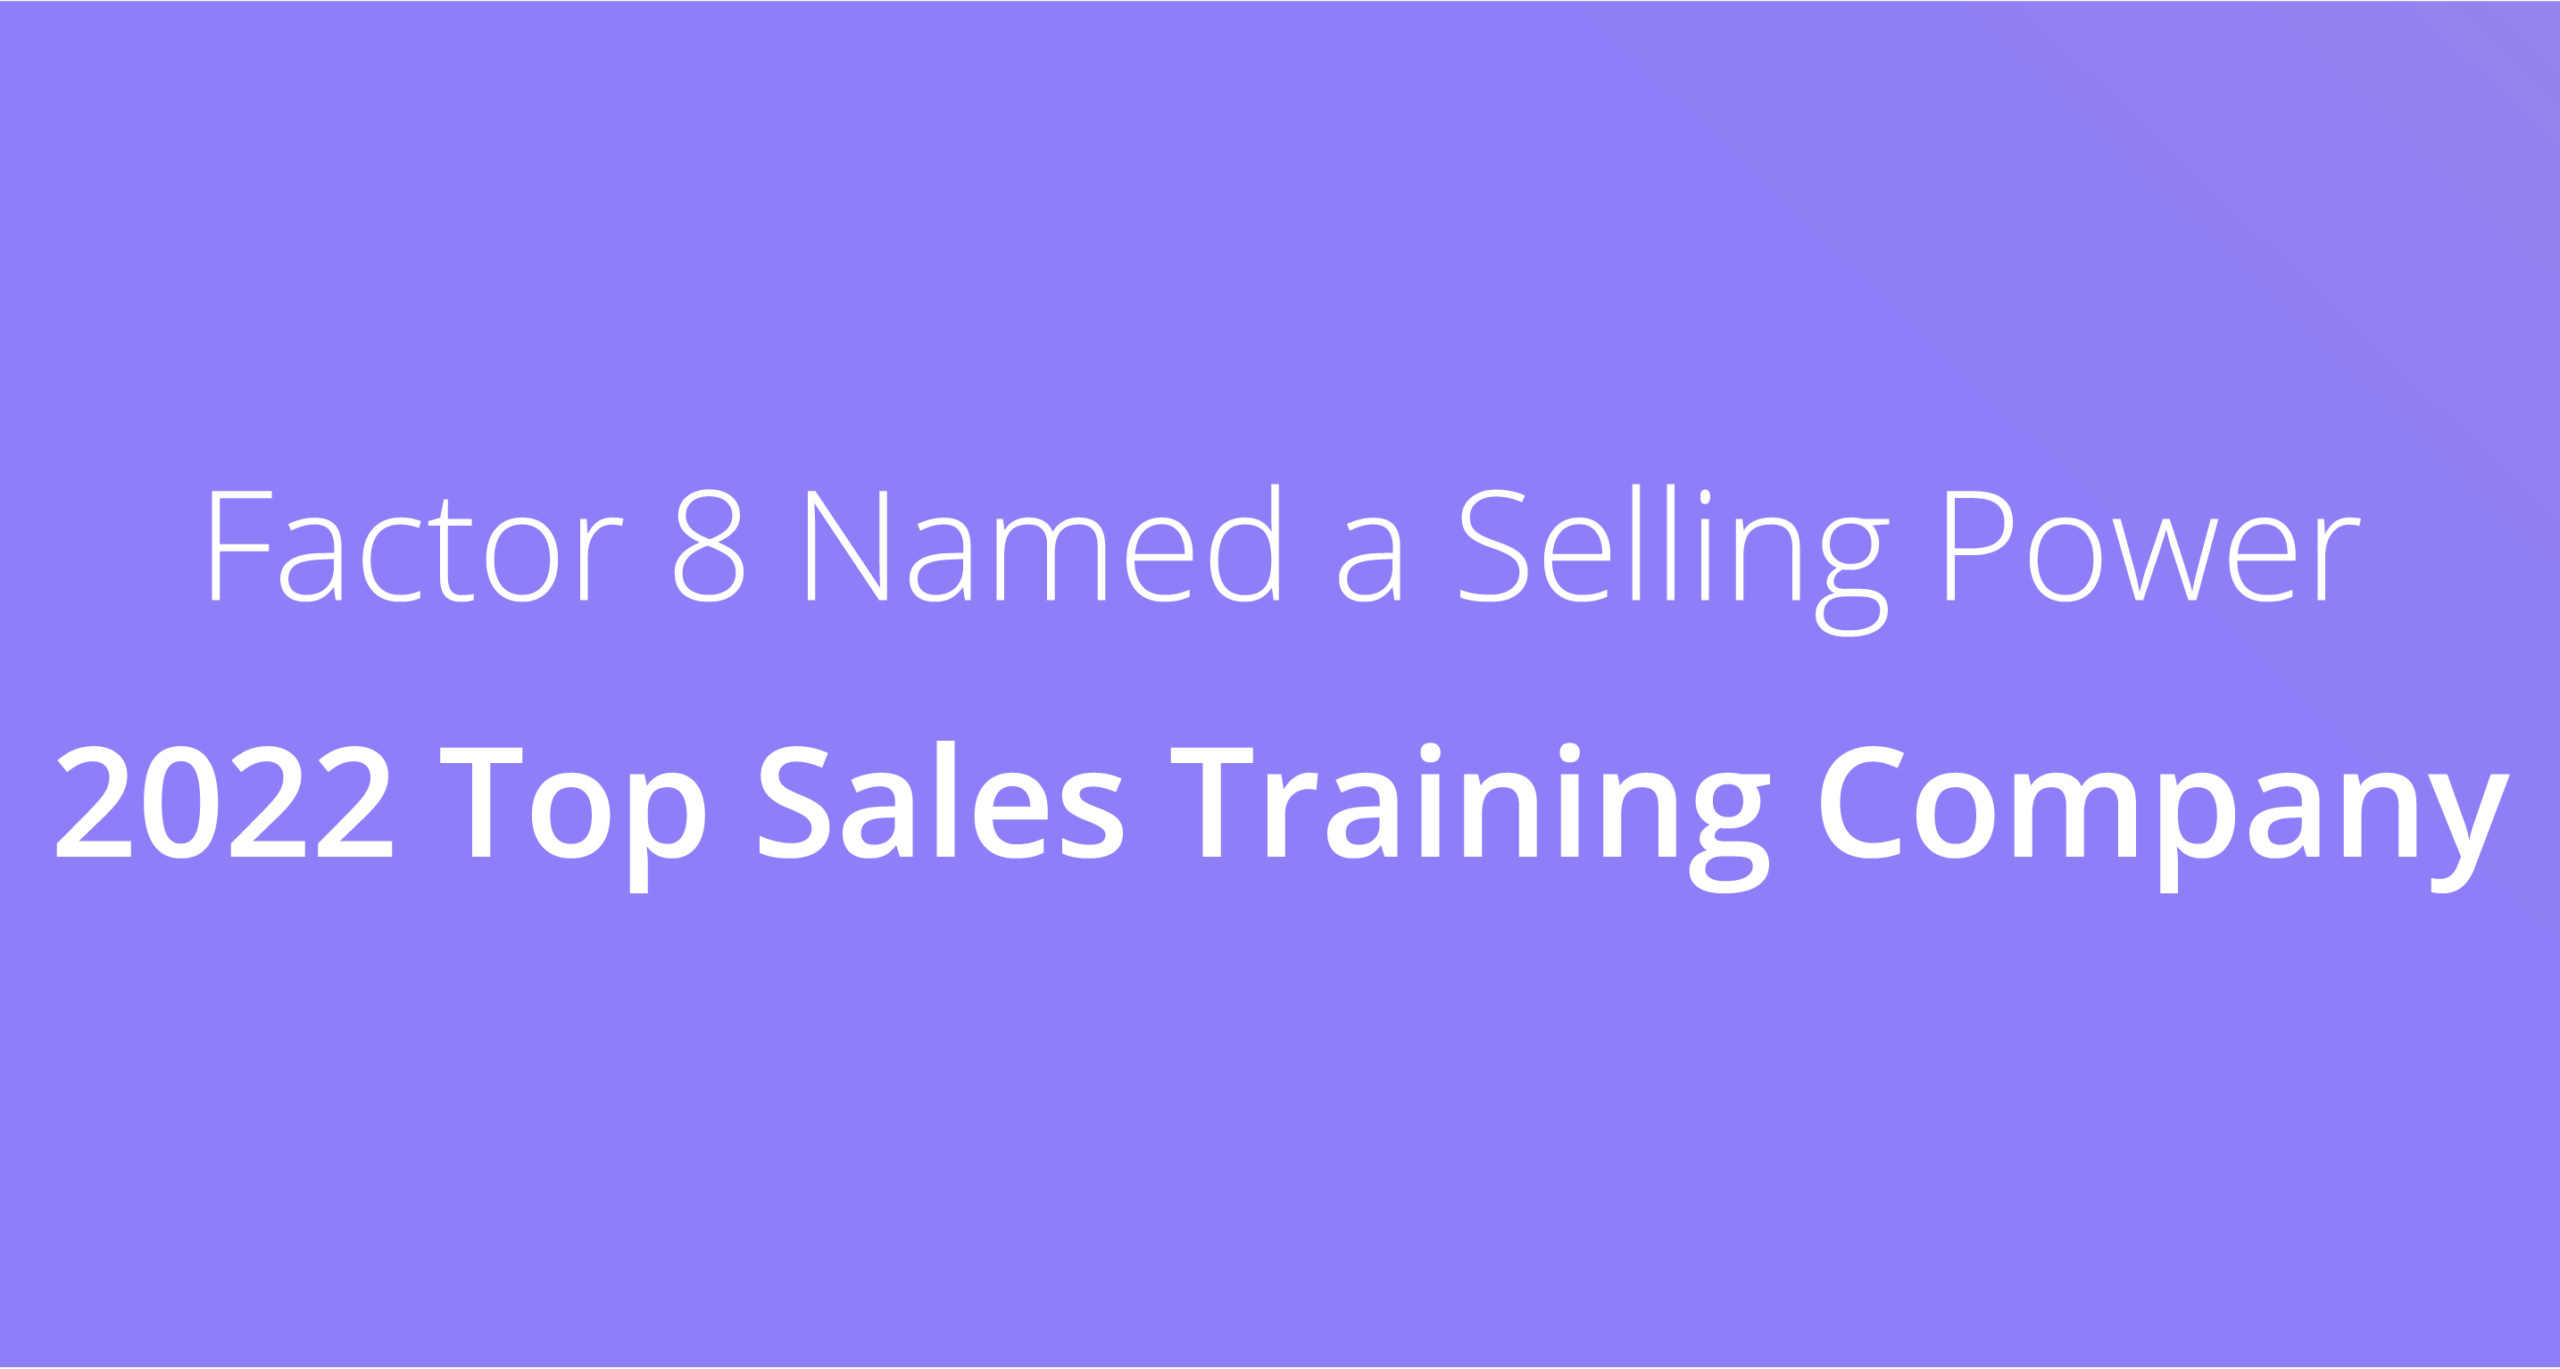 Top Sales Training Provider